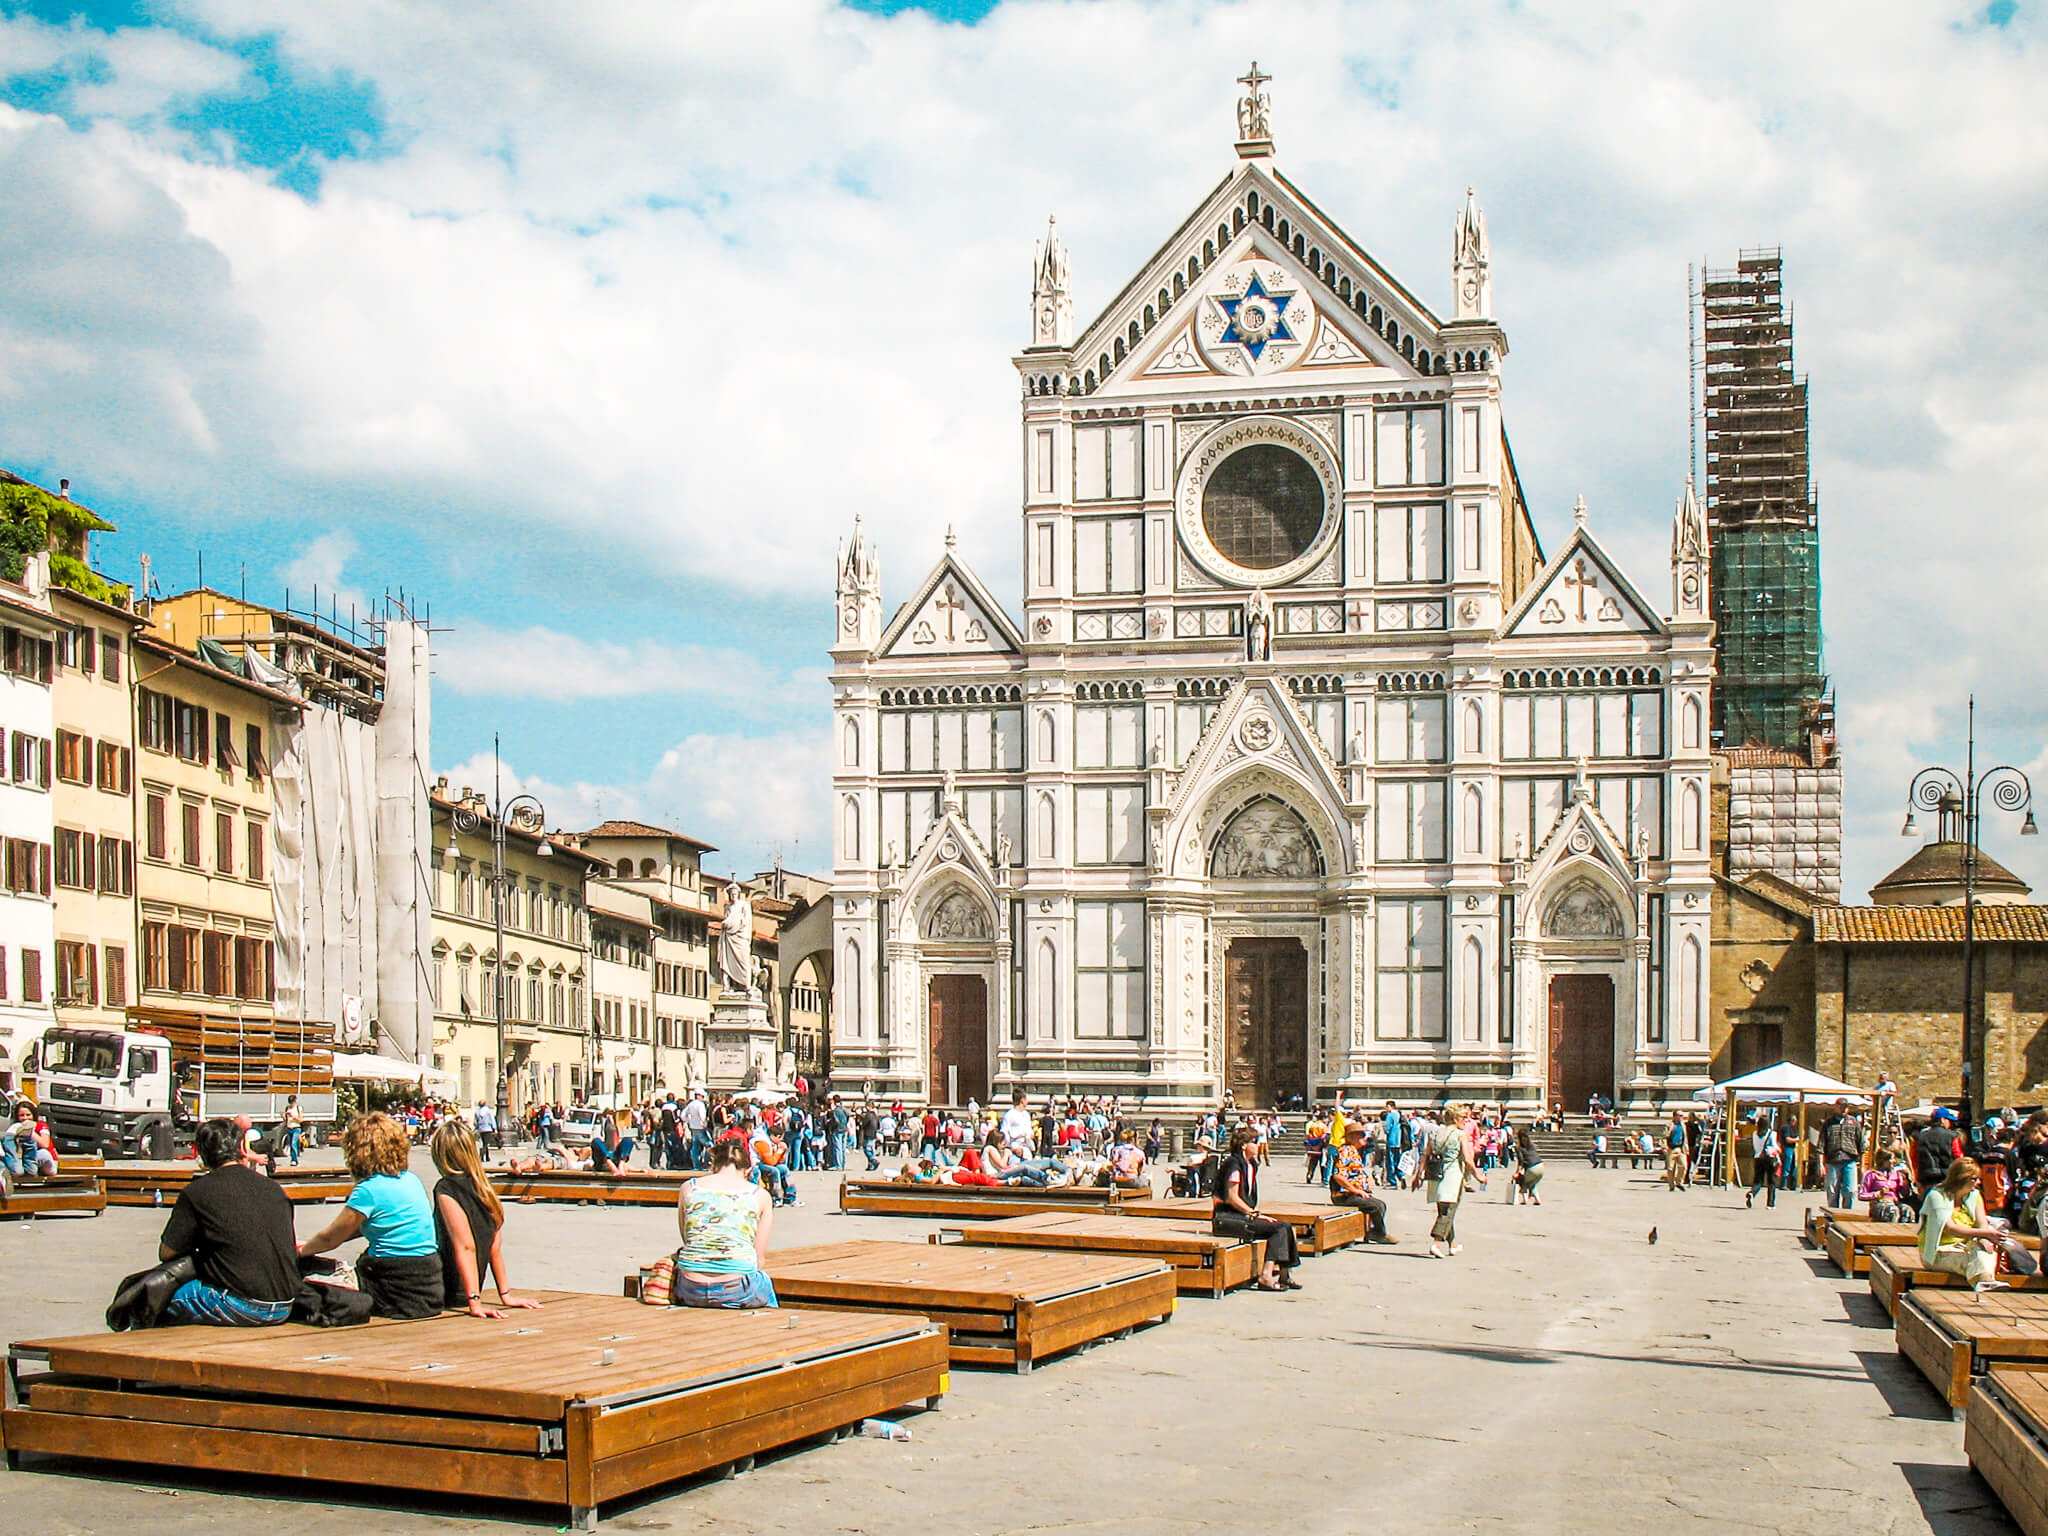 The Santa Croce basilica in Florence